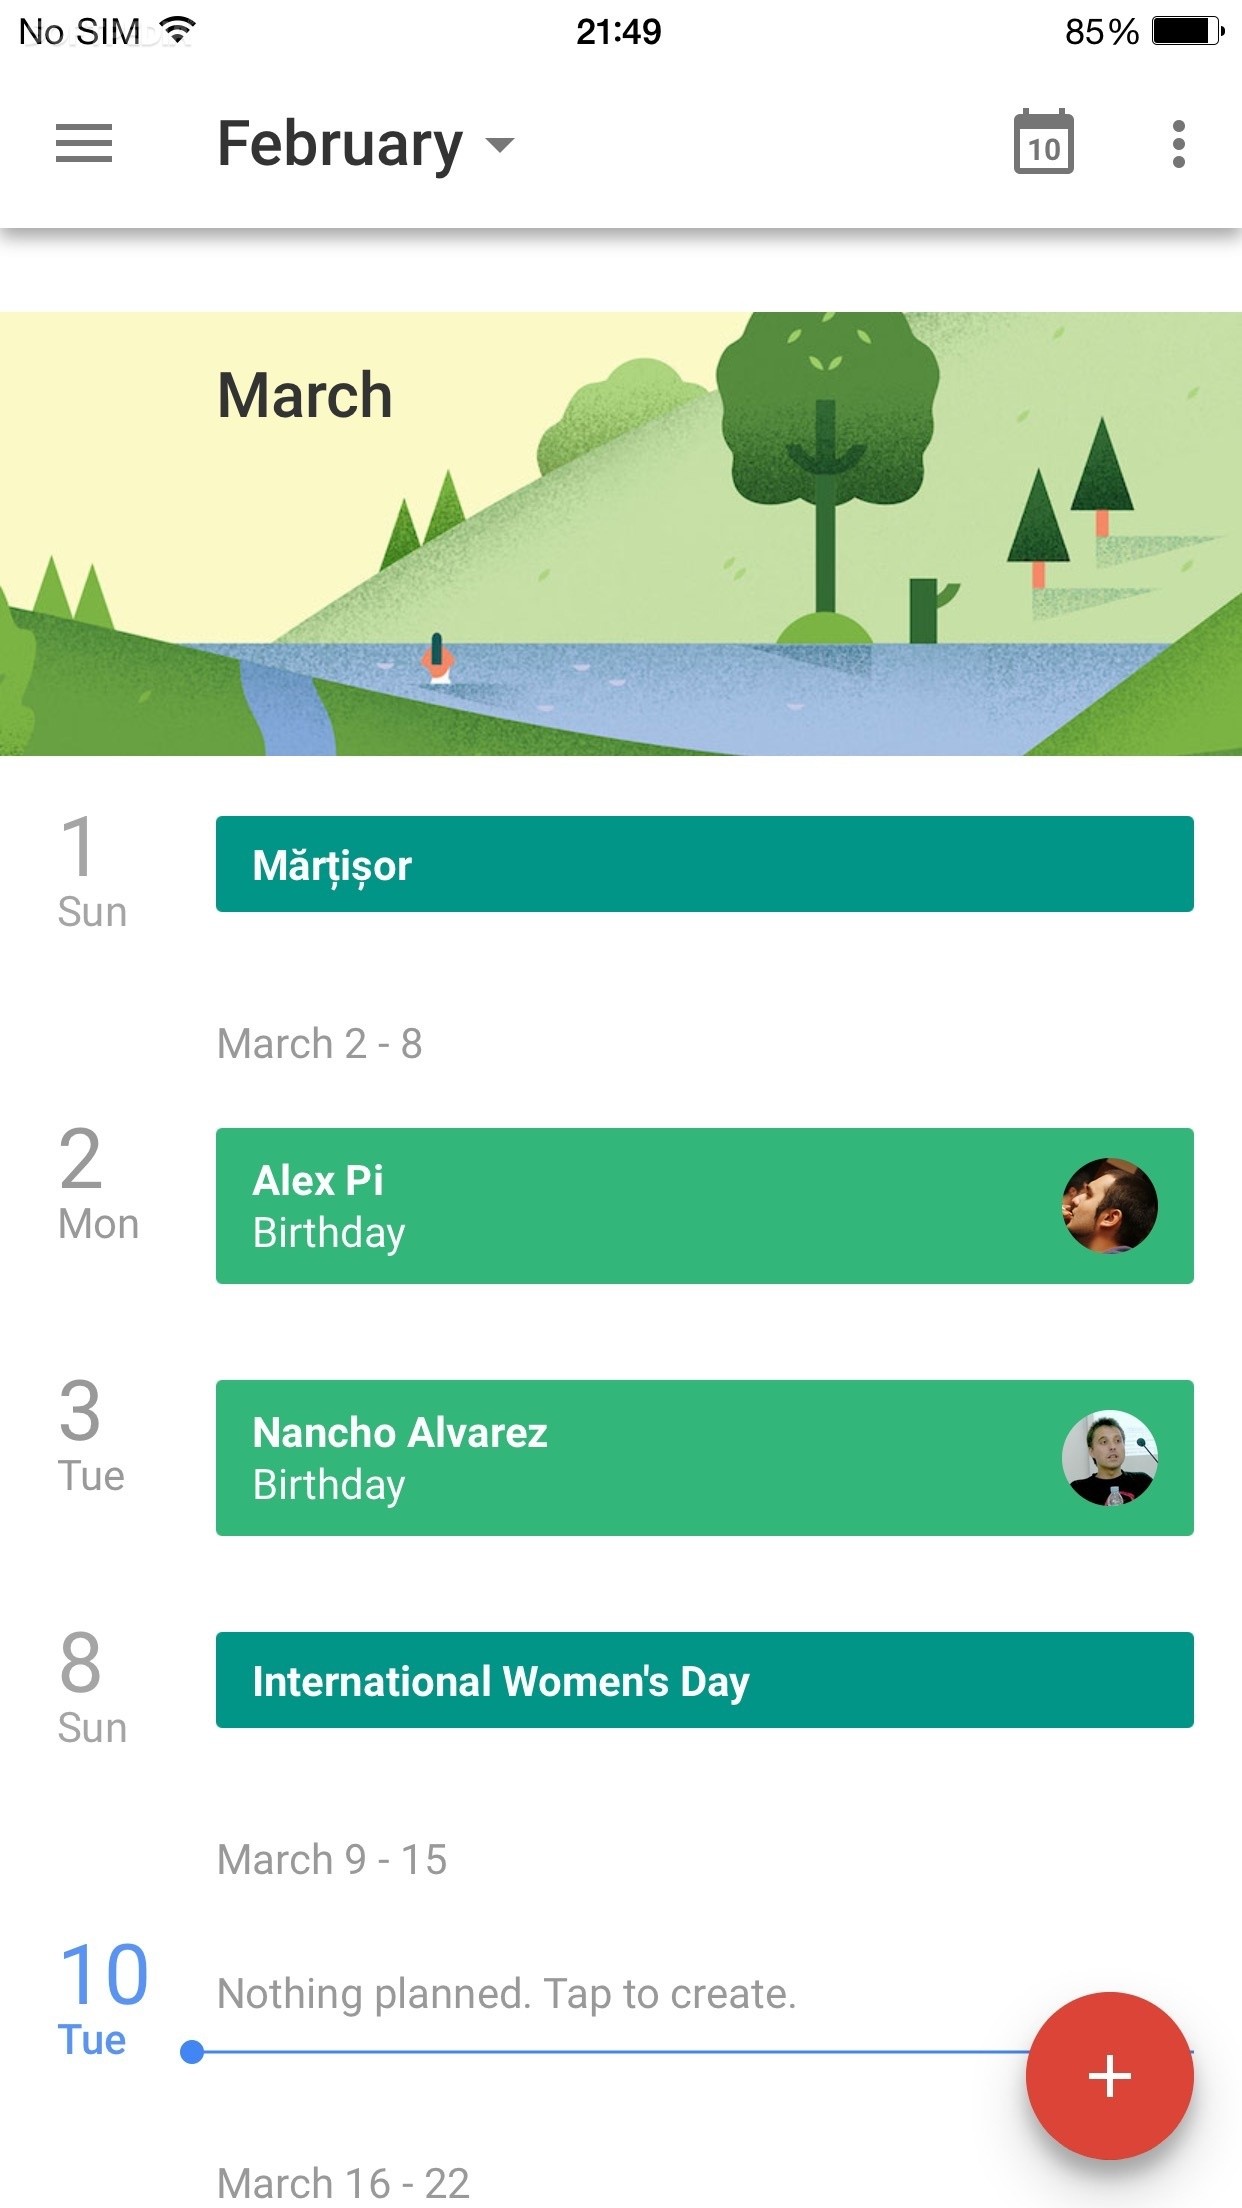 Google Releases Official Google Calendar App for iPhone